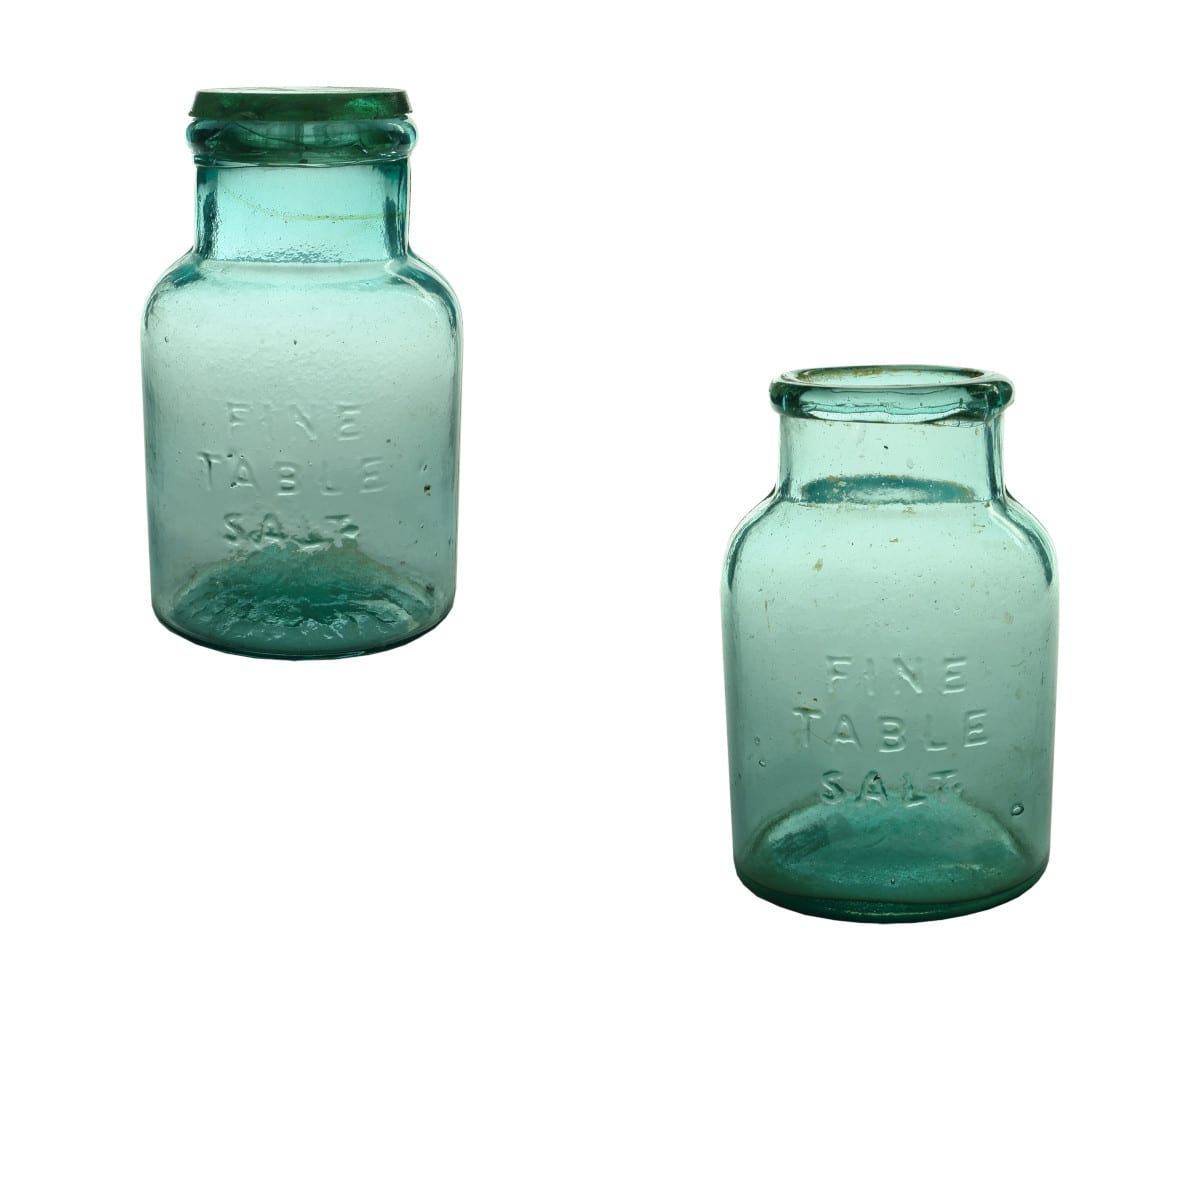 Two Salt Jars. Fine Table Salt. FBH. Altered Mould & Regular. Aqua. 2 Pound. (South Australia)